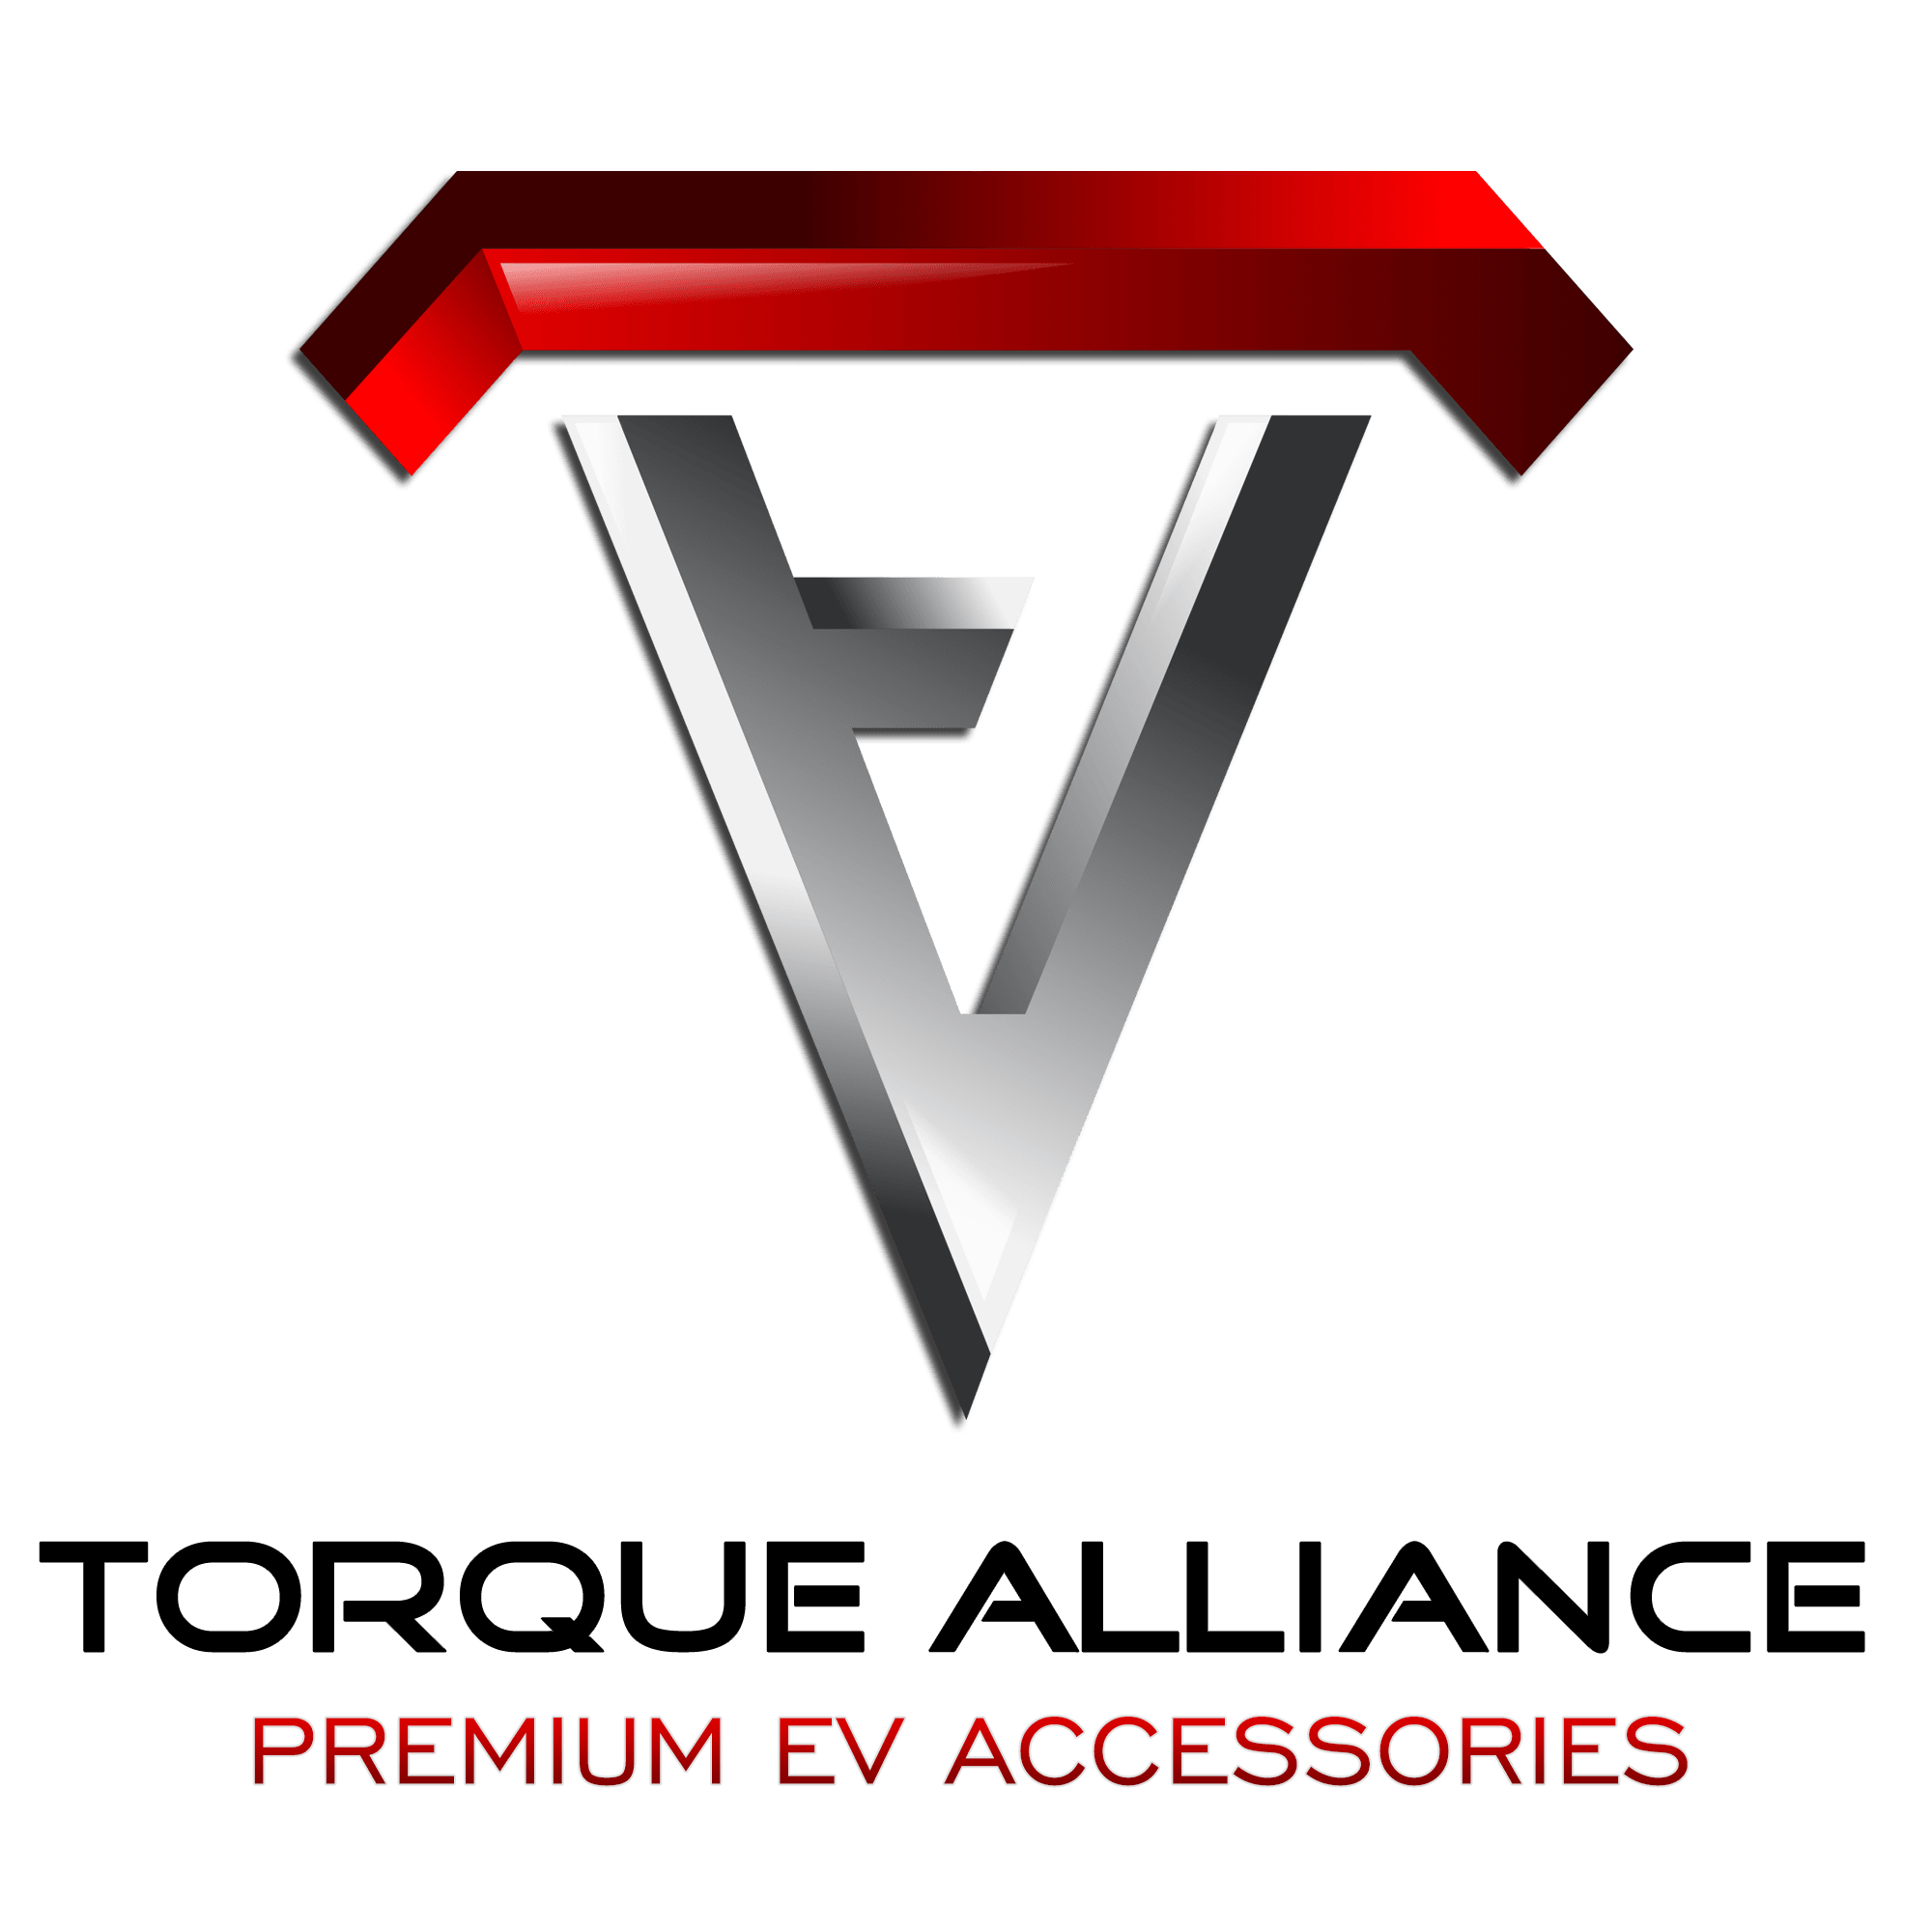 Meet Torque Alliance - Torque Alliance